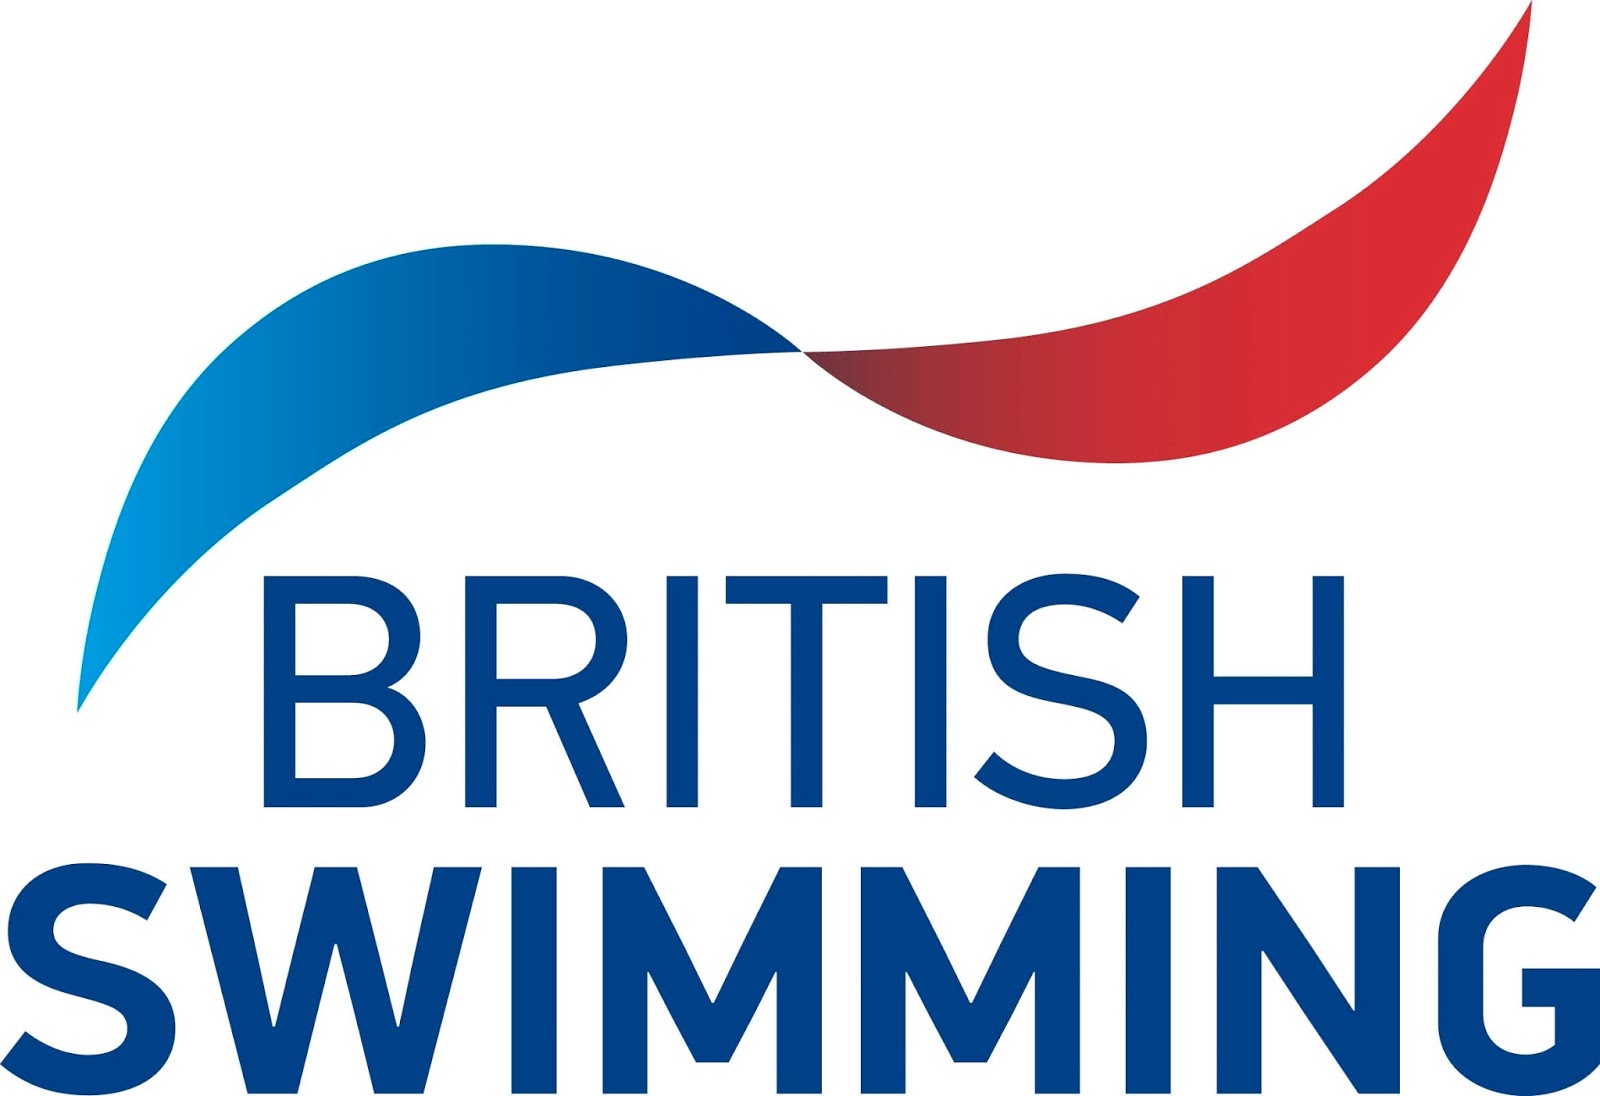 Olympic Swimming Logo Clip Art At Clker Com Vector Clip Art Online ...